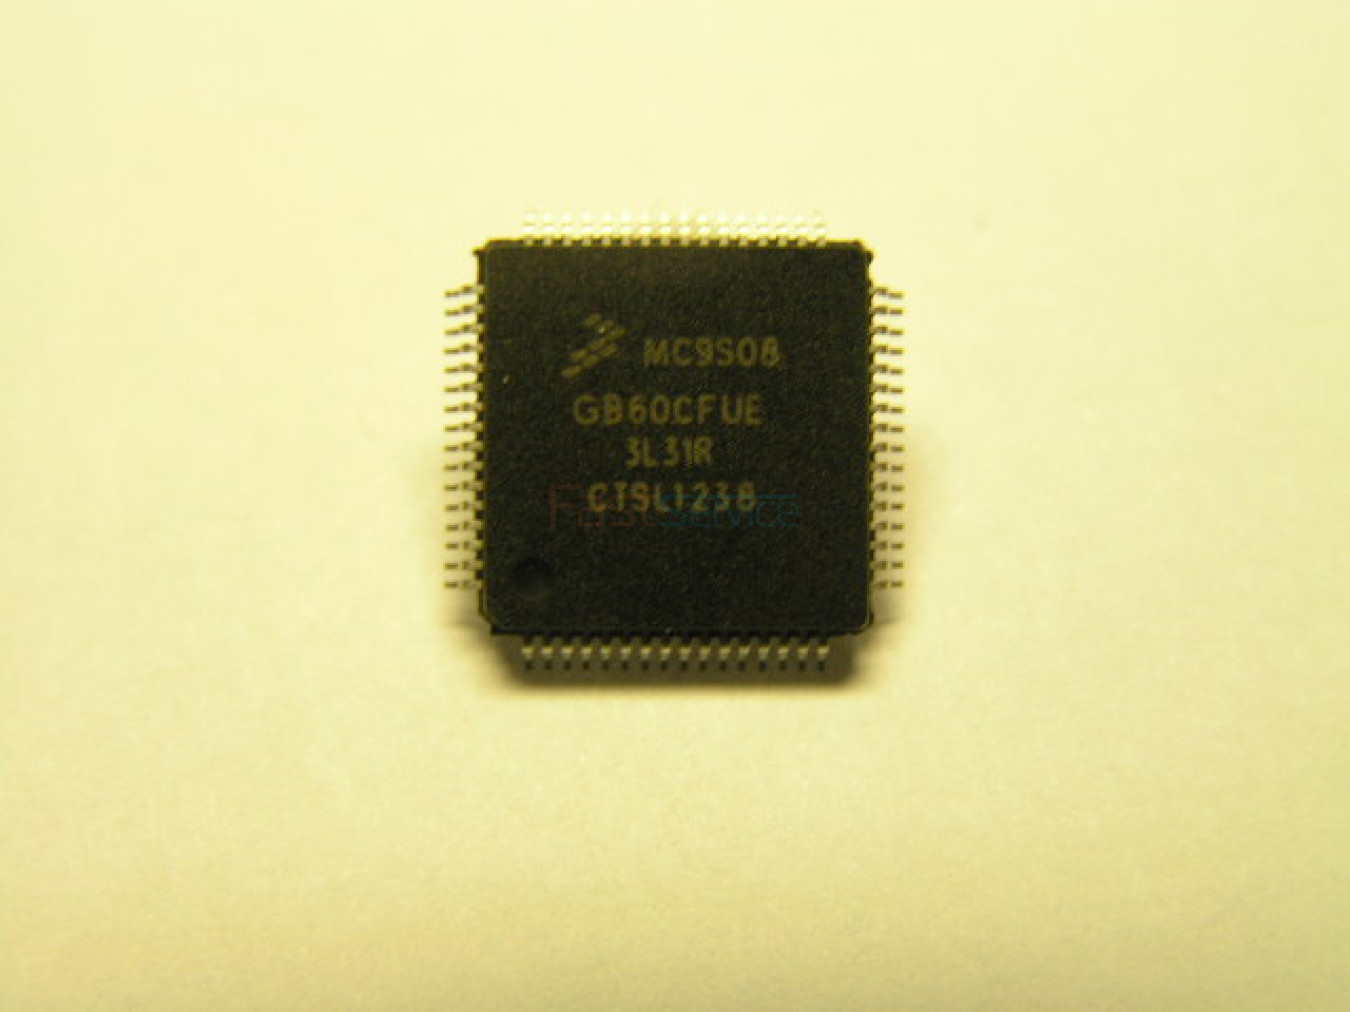 Процессор на модуль INDESIT ARISTON ARCADIA MC9S08GB60 прошитый